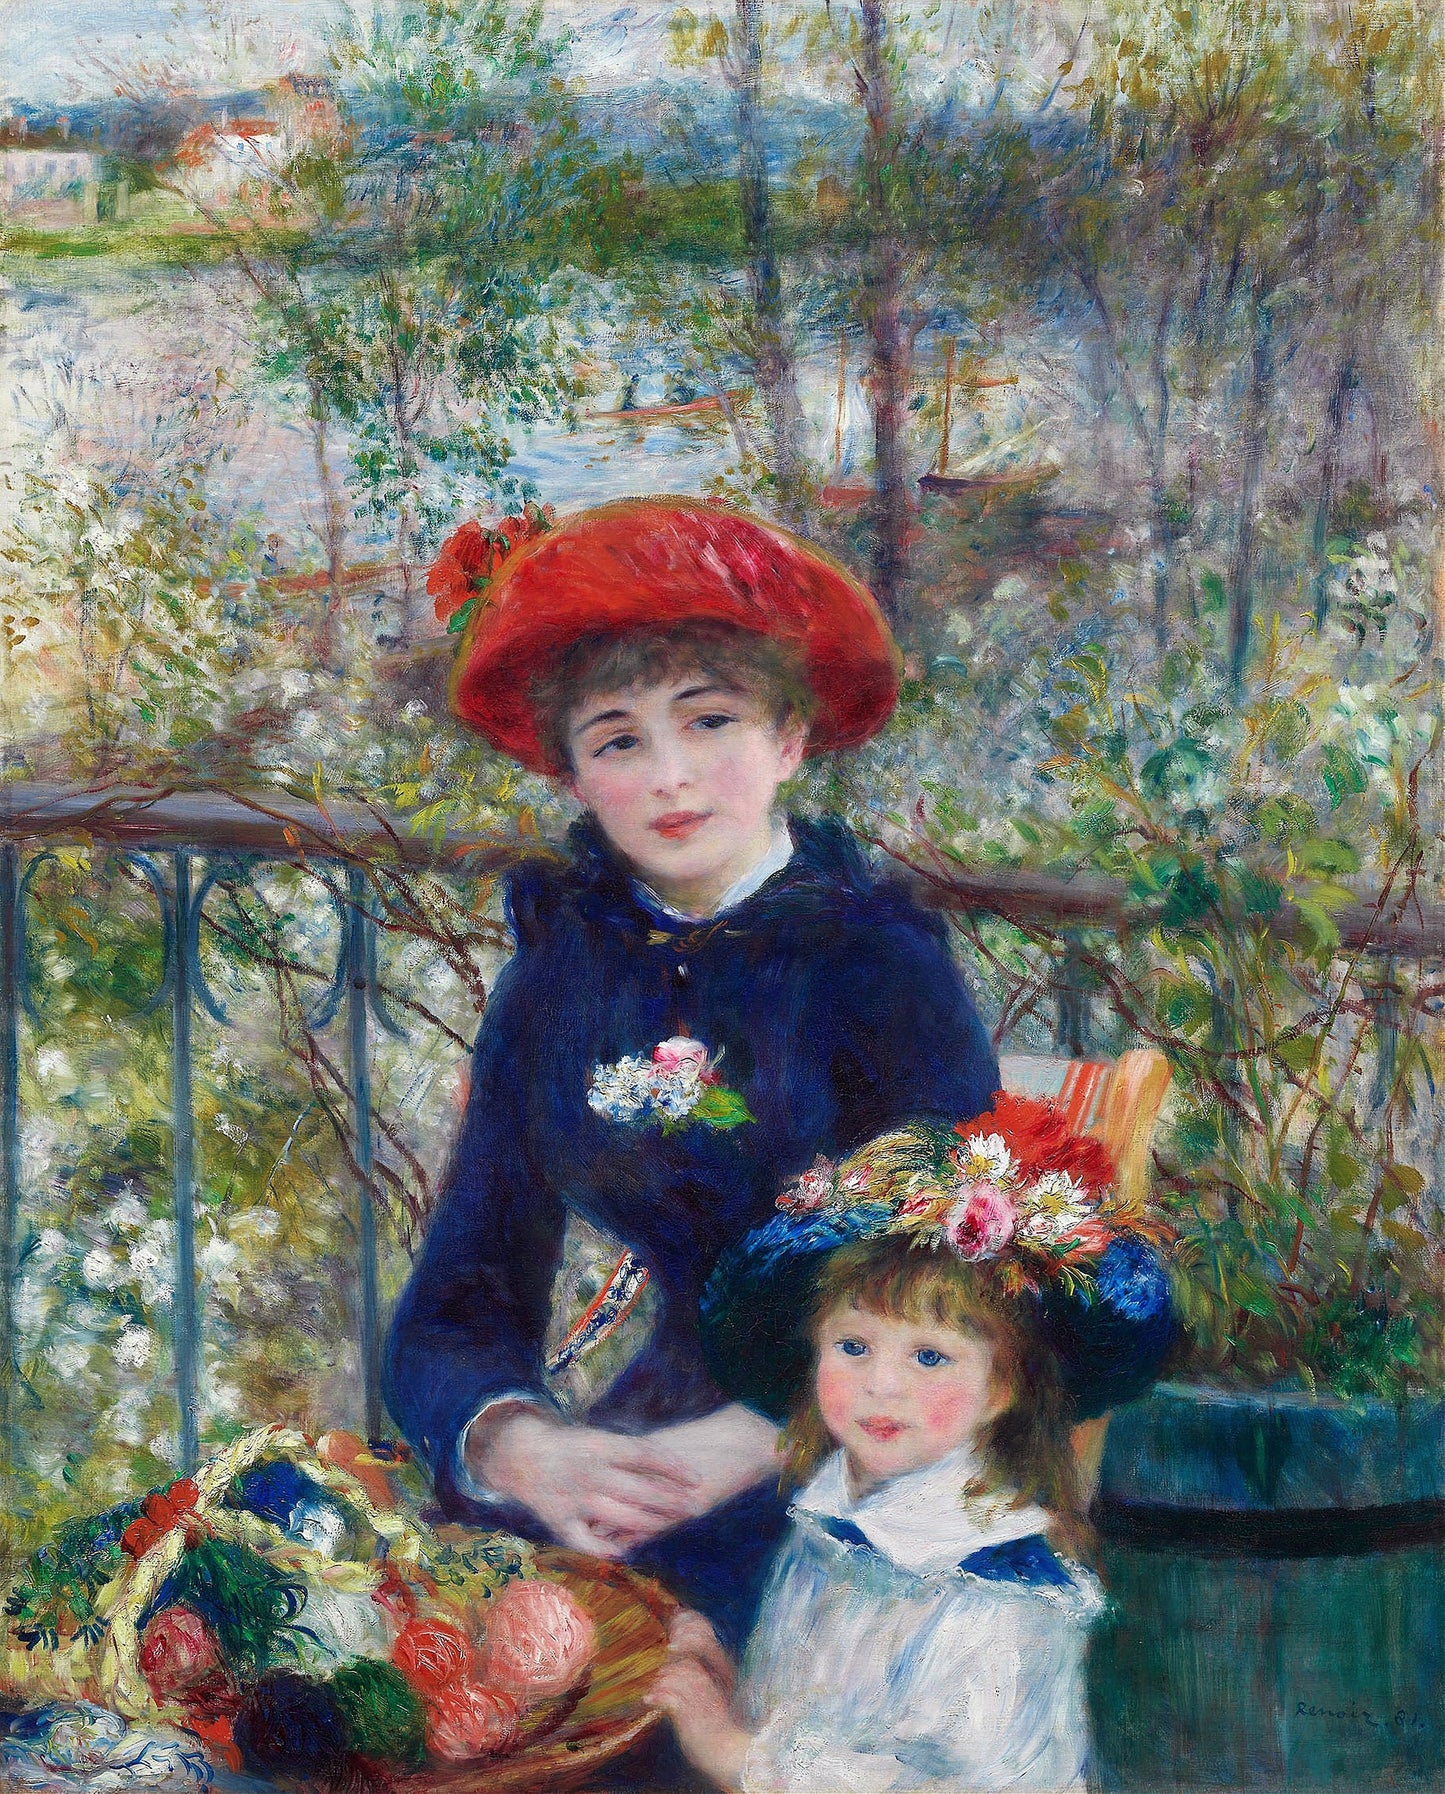 Pierre Renoir Impressionist Paintings Set 8 [24 Images]